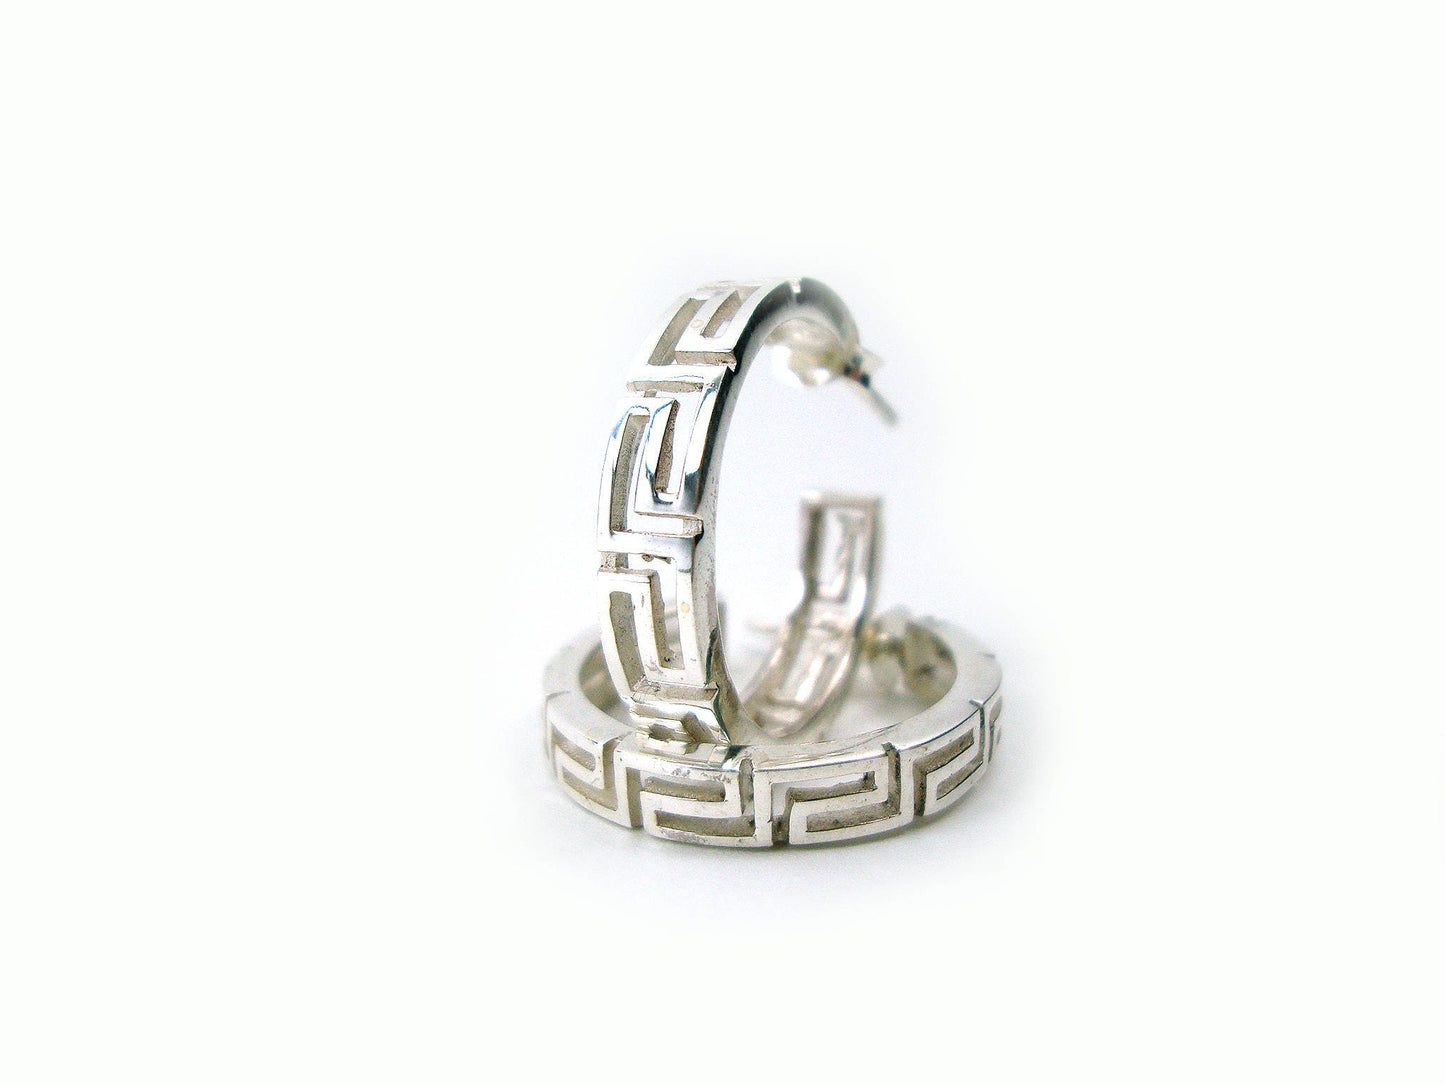 Griechische Ohrringe aus Sterlingsilber 925, griechische Ewigkeitsschlüssel-Creolen 21 mm, griechische Ohrringe, Boucles d'oreilles grecques